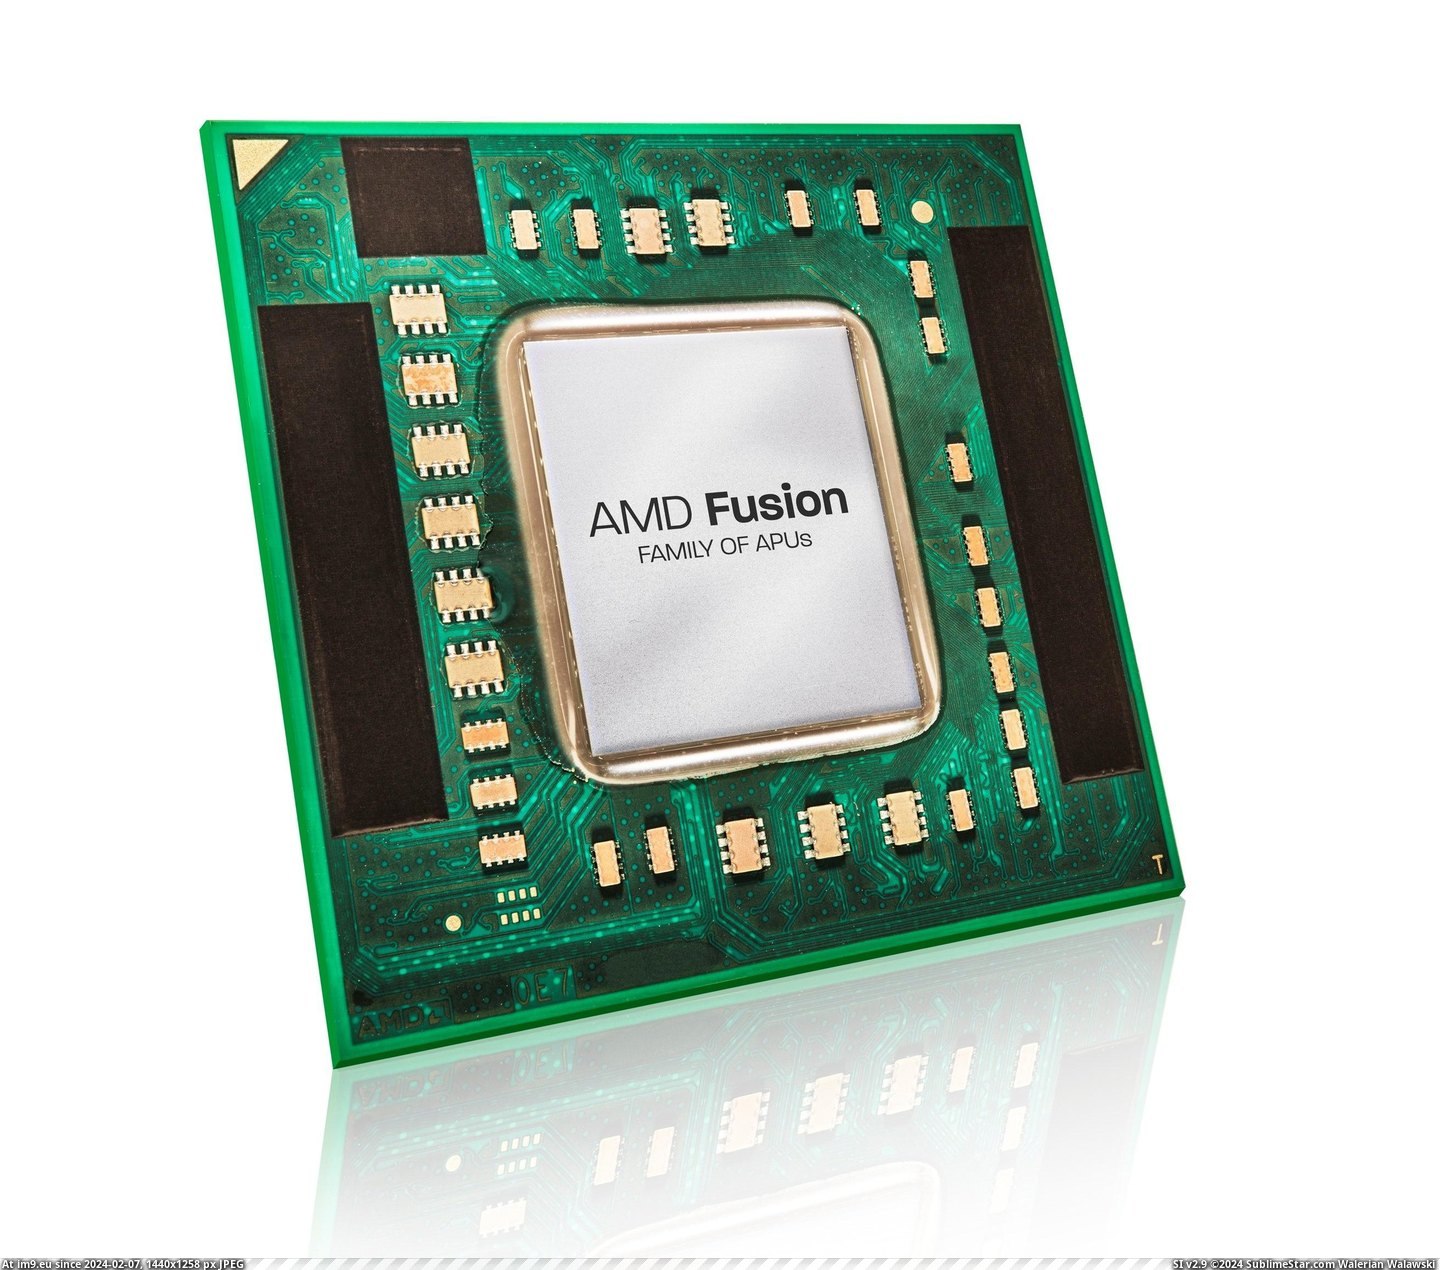 #Fusion #Apu #Amd AMD Fusion APU Pic. (Obraz z album Rehost))